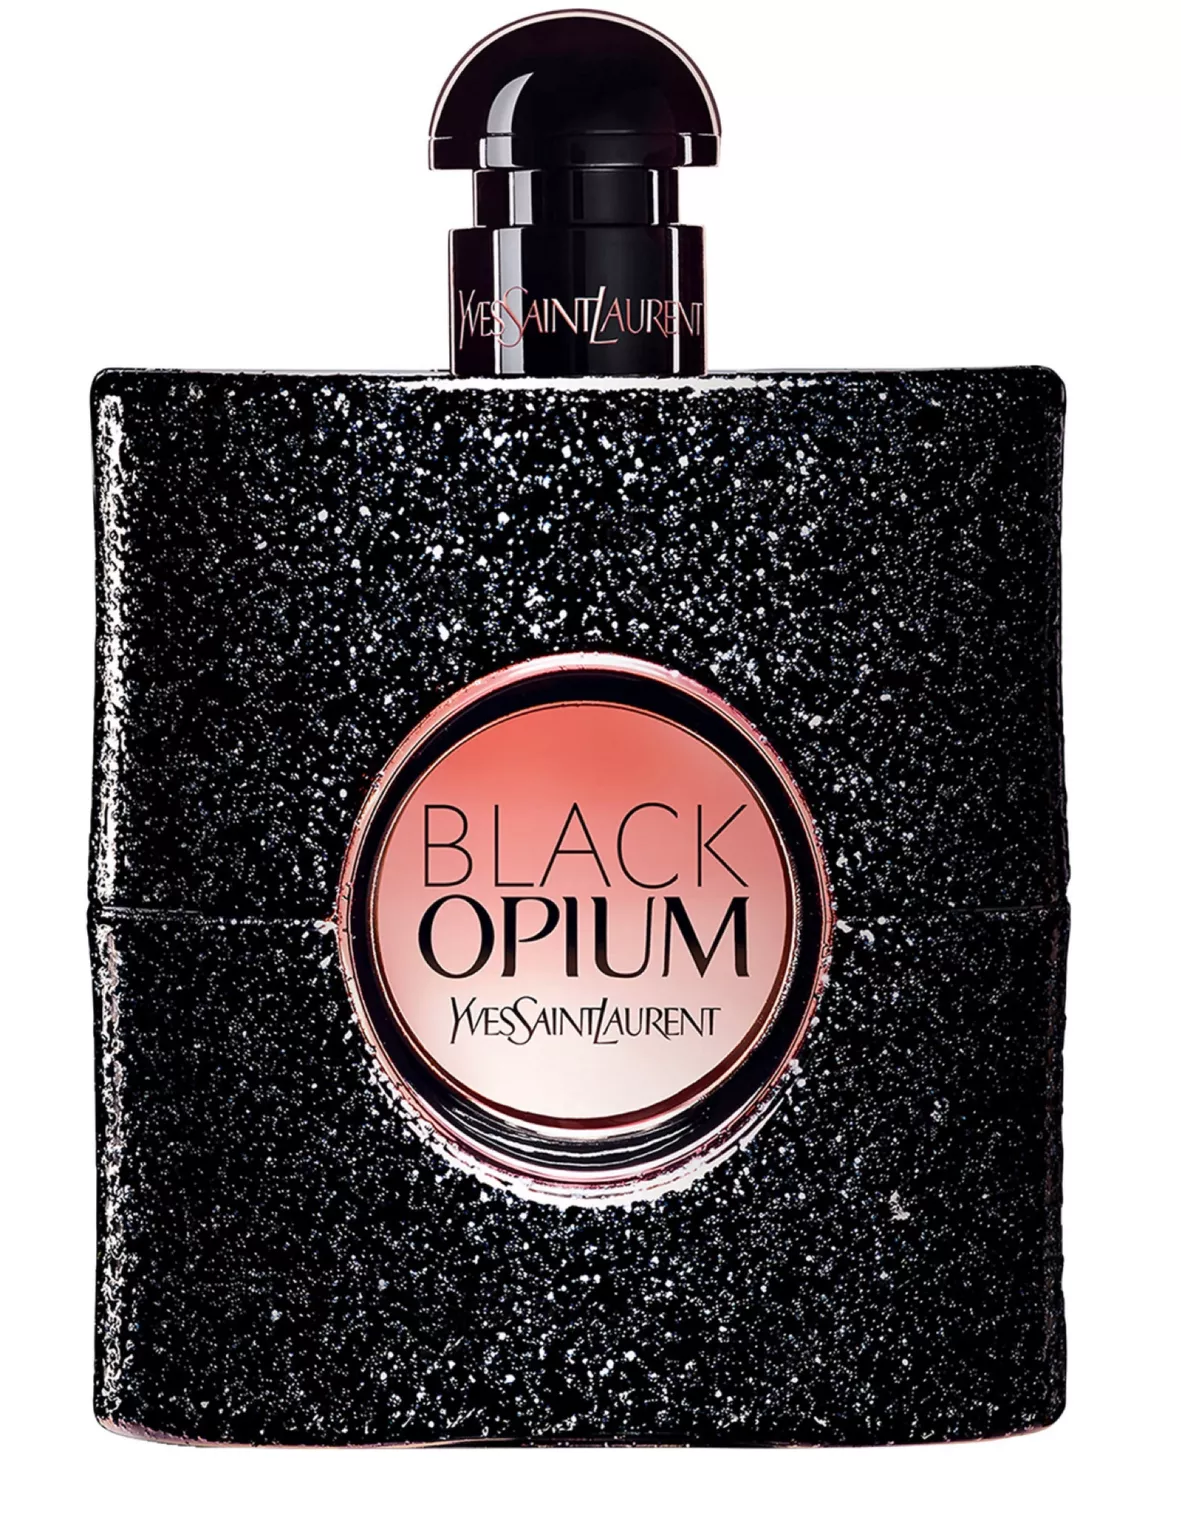 Black Opium Le Parfum curated on LTK